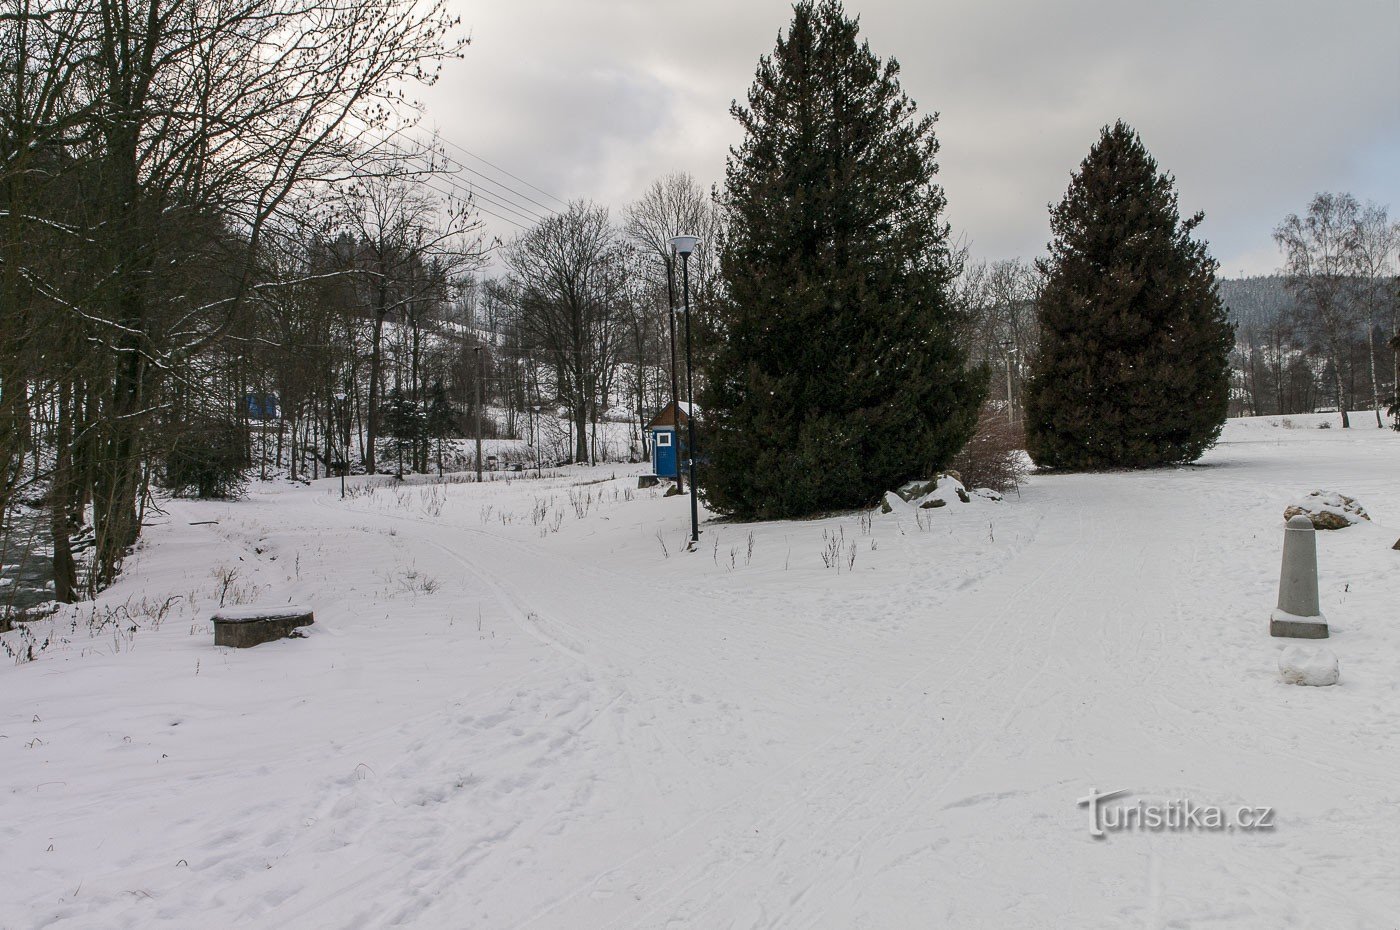 Karlov pod Pradědem - Inline track in winter and summer